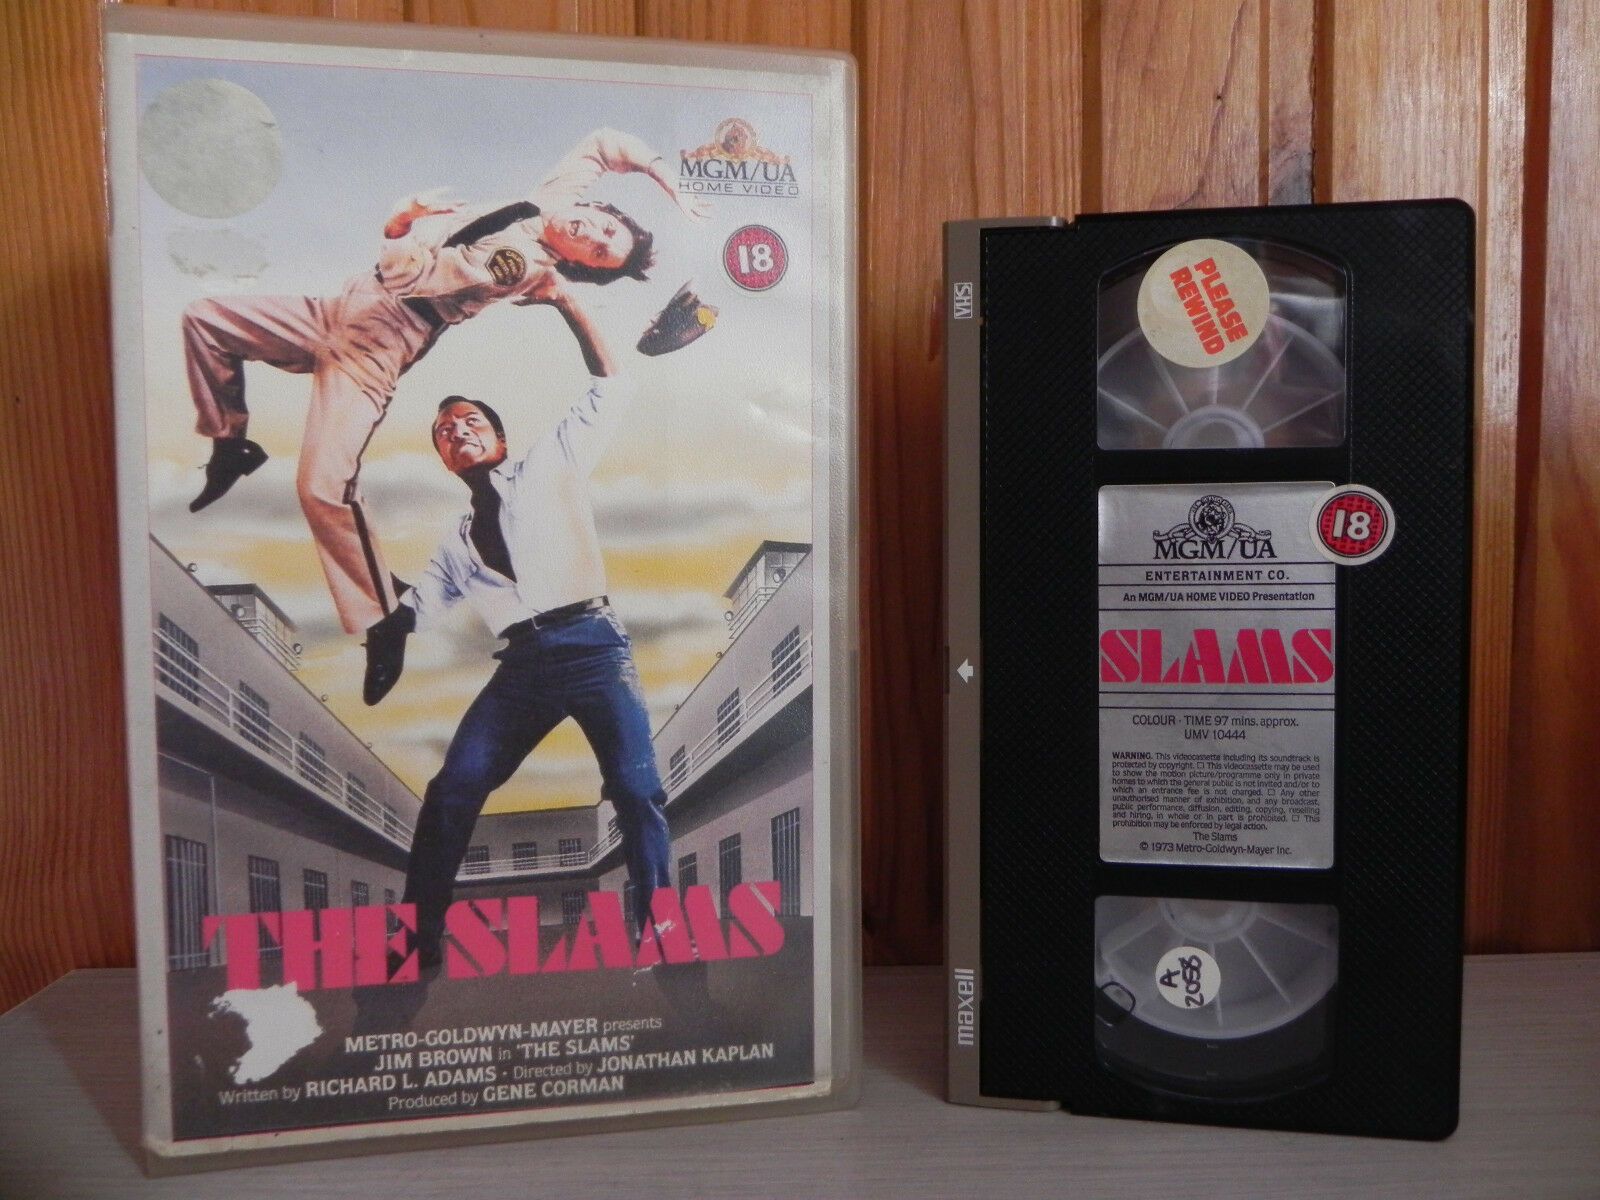 The Slams - Jail Break/HIgh Life - Jim Brown - Action Drama - Pre-Cert - Pal VHS-